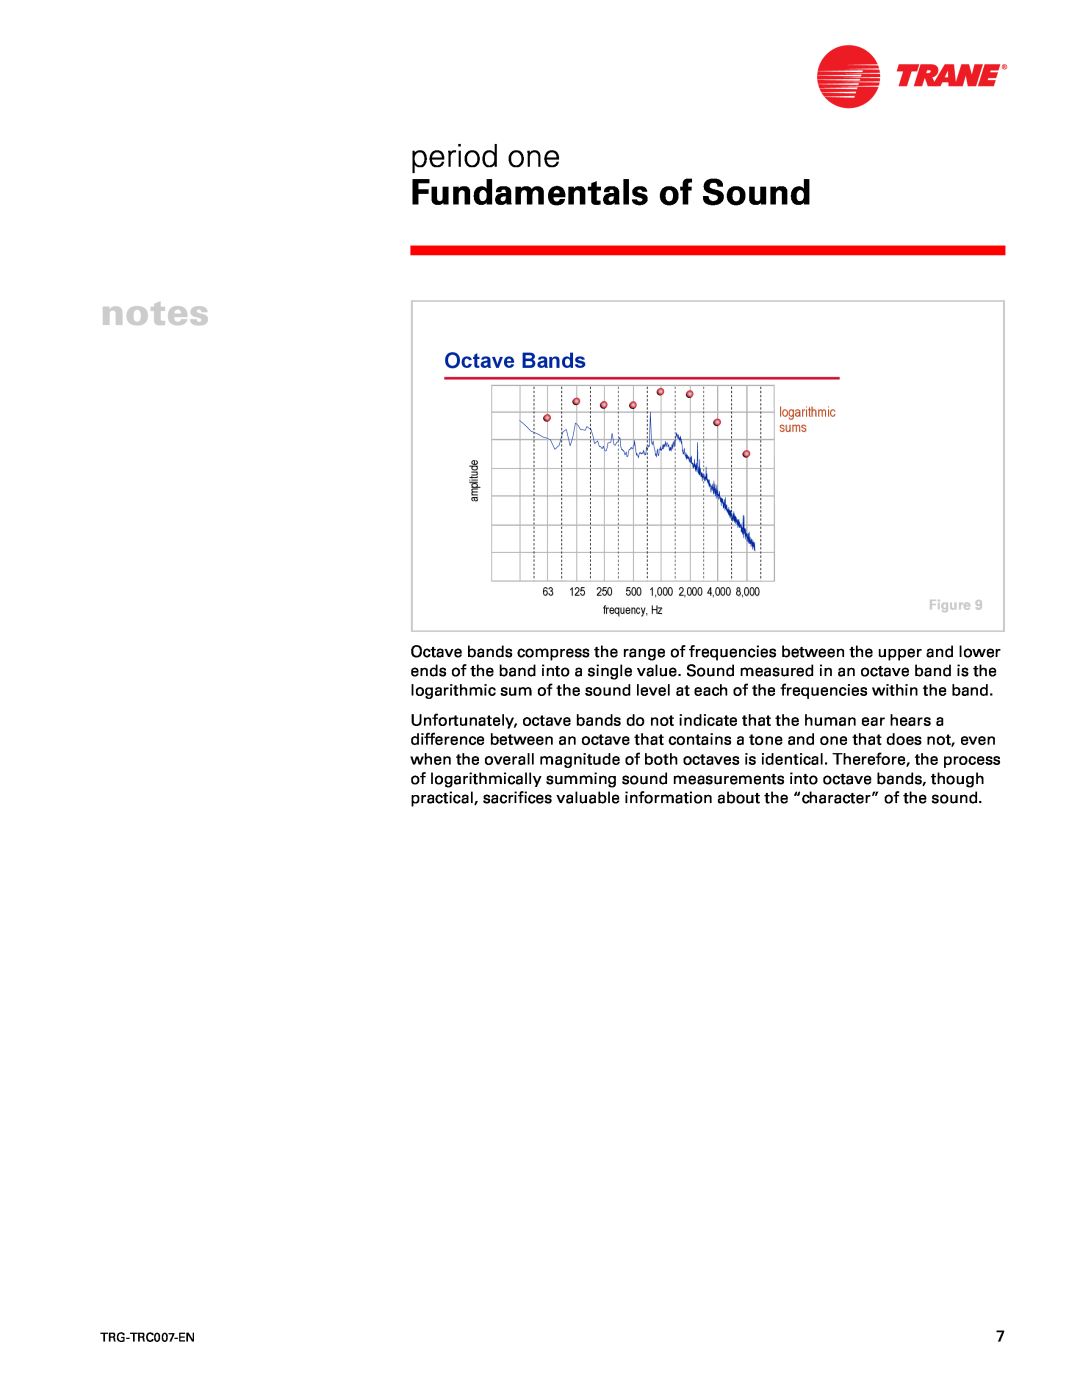 Trane TRG-TRC007-EN manual Fundamentals of Sound, period one, Octave Bands 